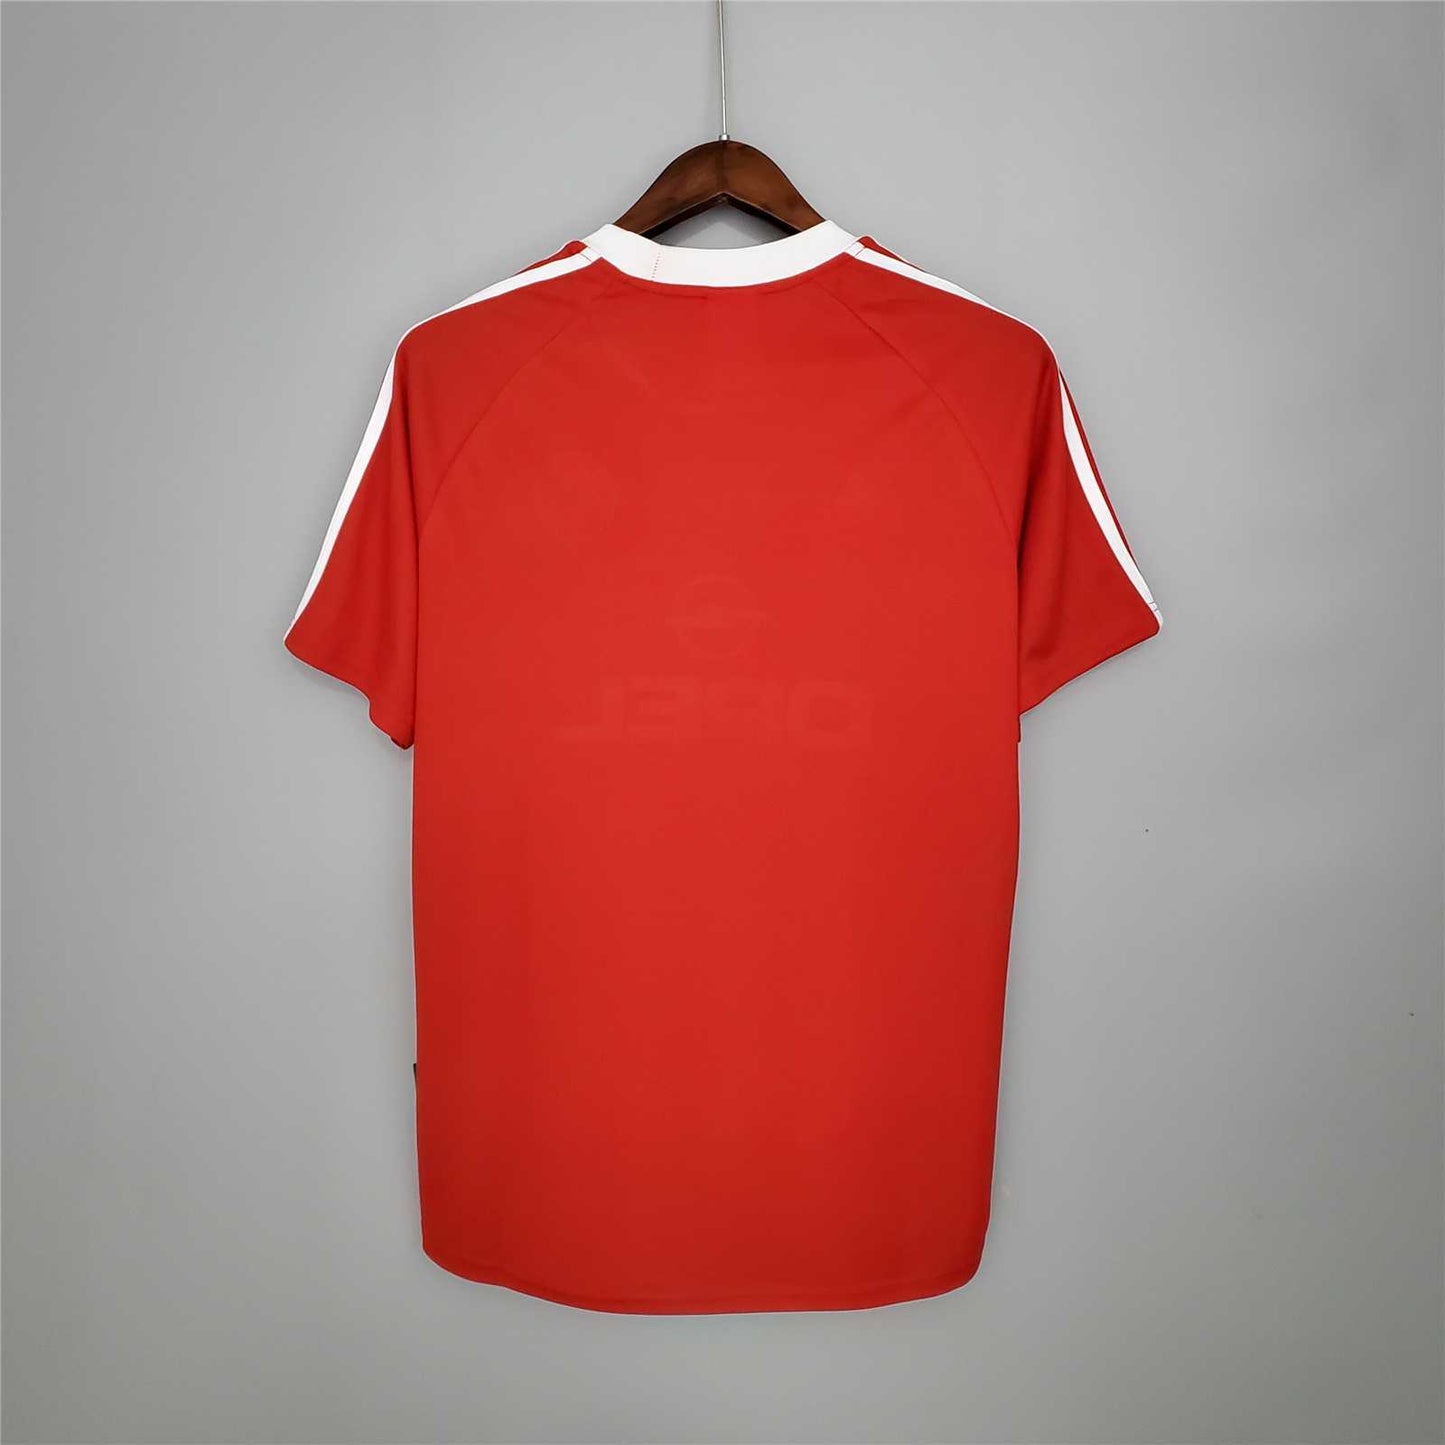 FC Bayern Munich 00-02 Home European Shirt